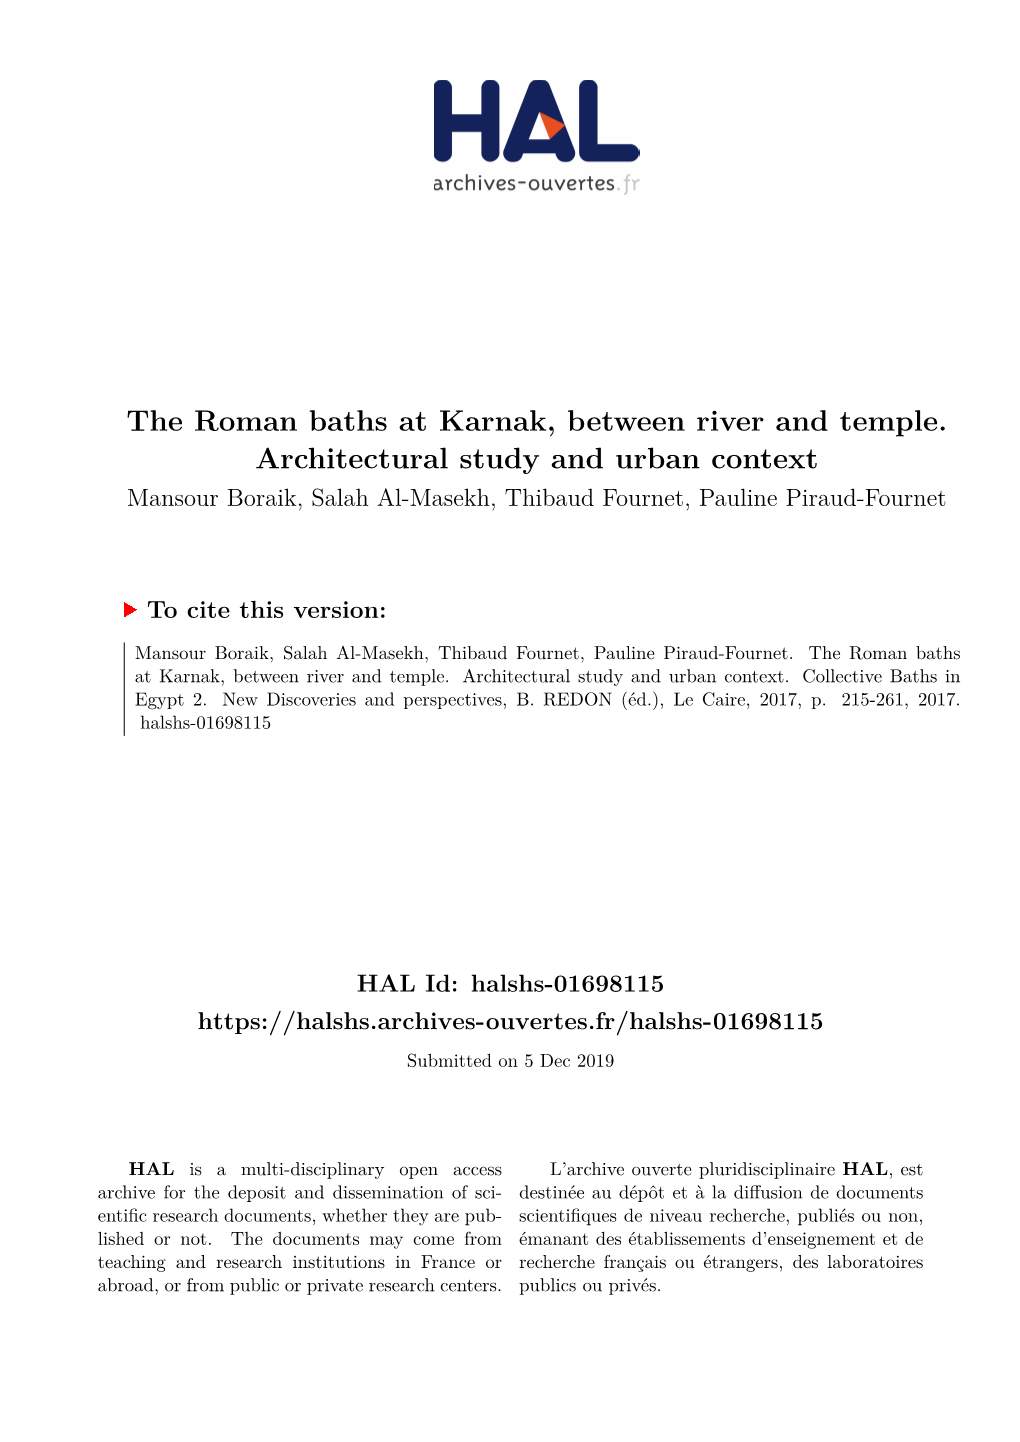 The Roman Baths at Karnak, Between River and Temple. Architectural Study and Urban Context Mansour Boraik, Salah Al-Masekh, Thibaud Fournet, Pauline Piraud-Fournet